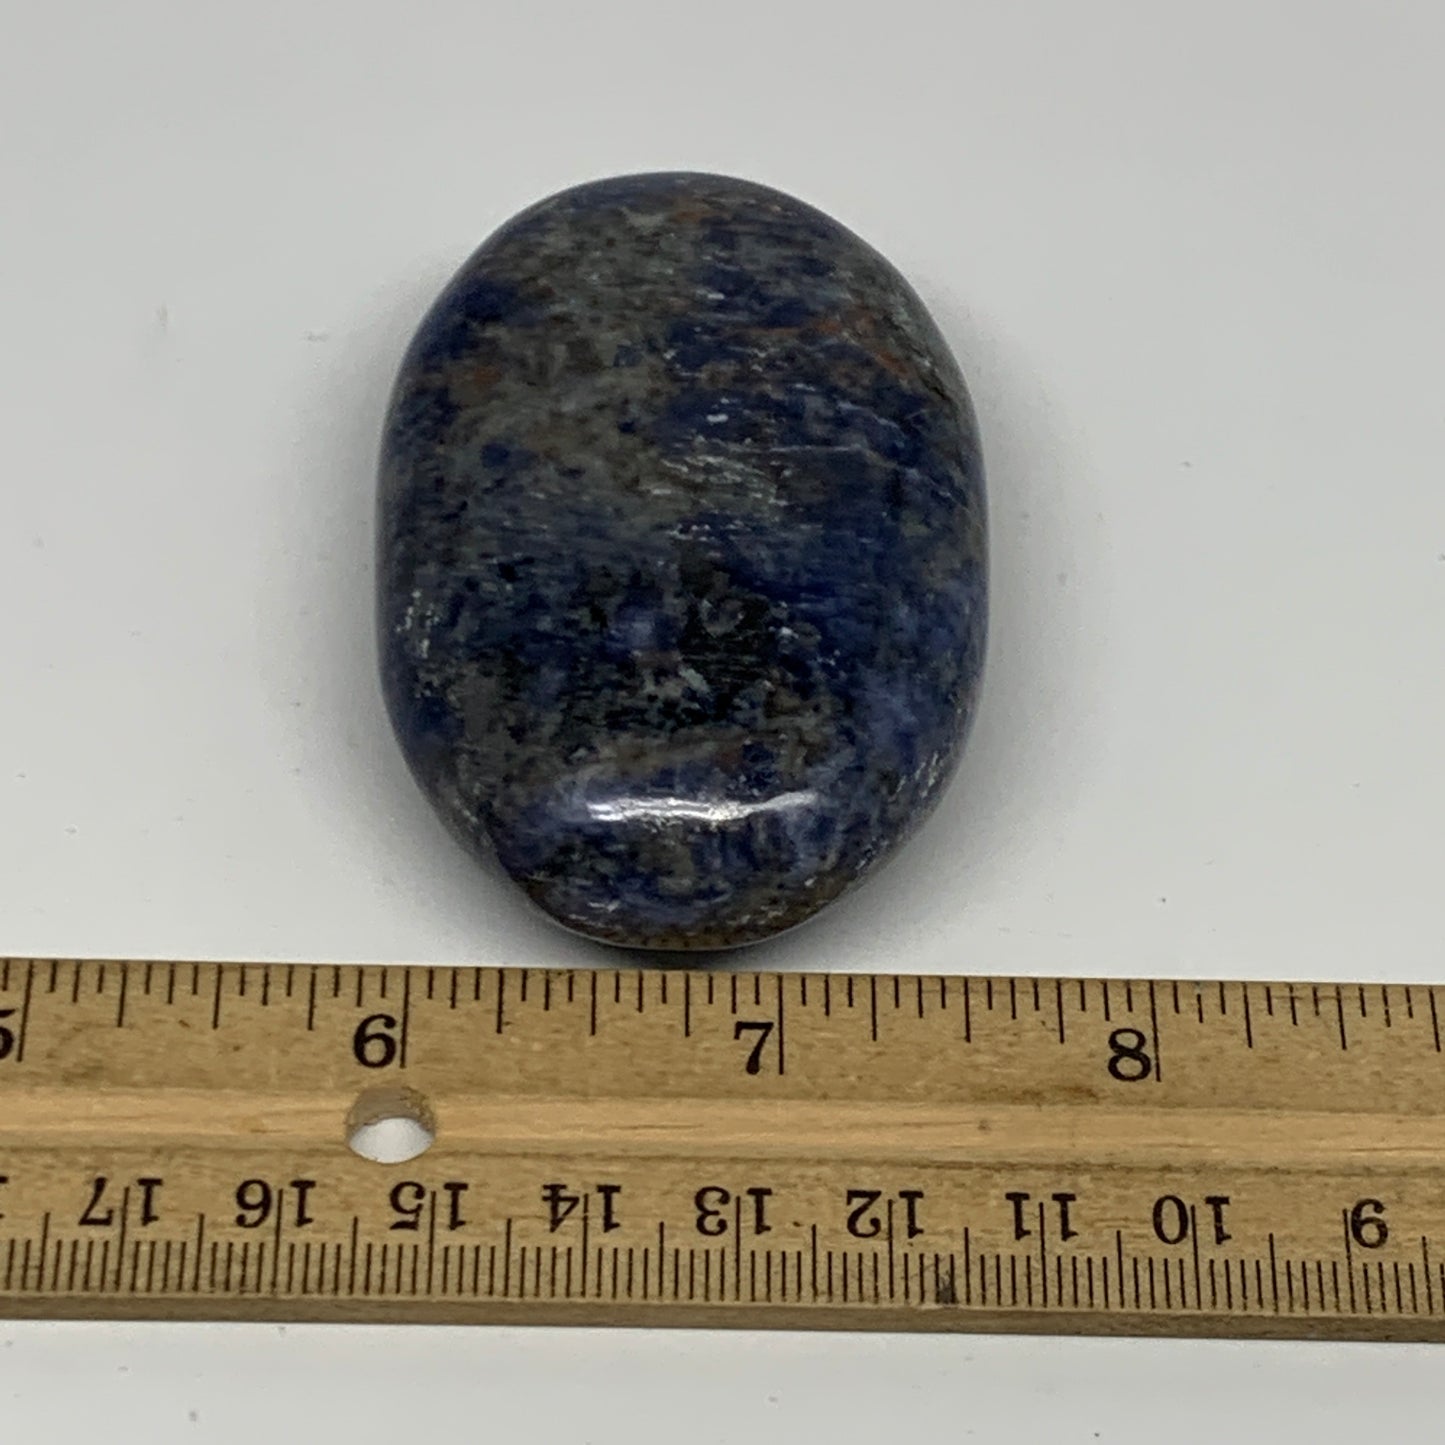 106.3g, 2.7"x1.7"x0.8", Sodalite Palm-Stone Crystal Polished Handmade, B21768